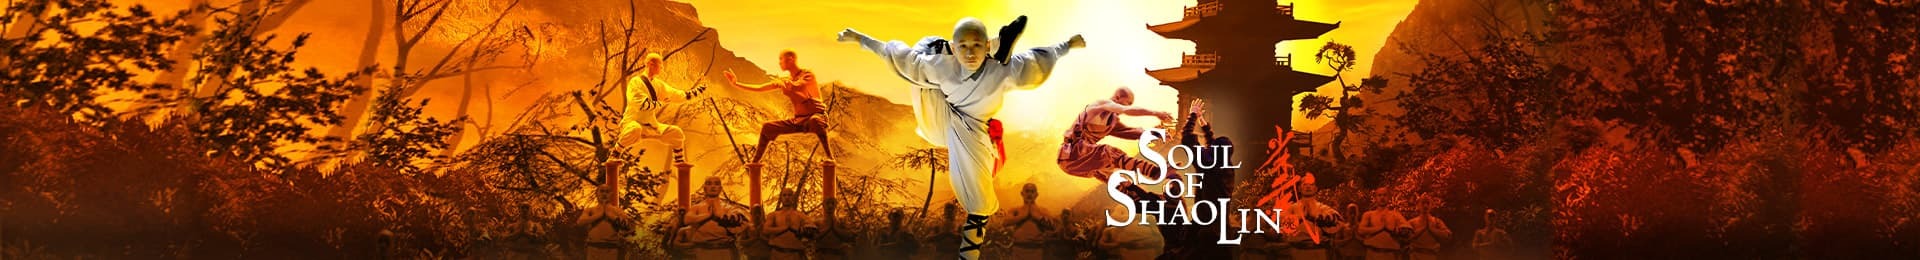 Soul of Shaolin banner image